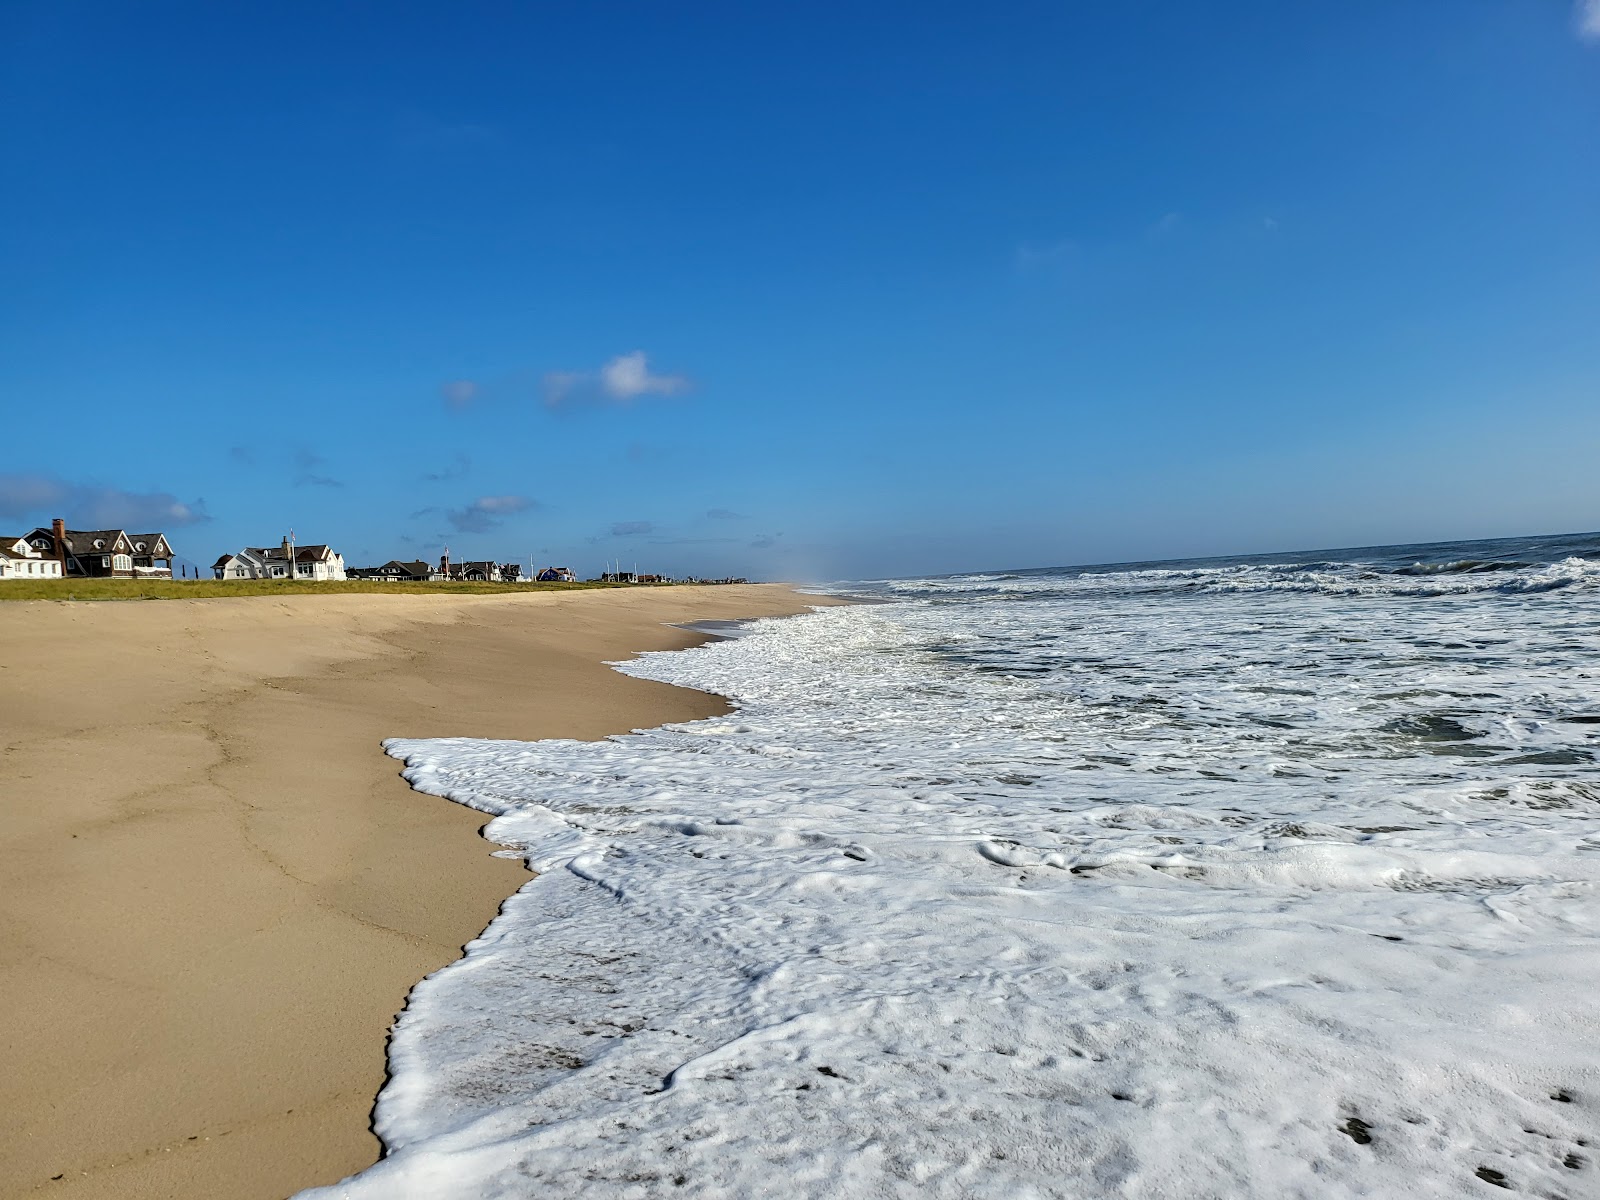 Foto di Lyman Str. Beach con una superficie del sabbia luminosa